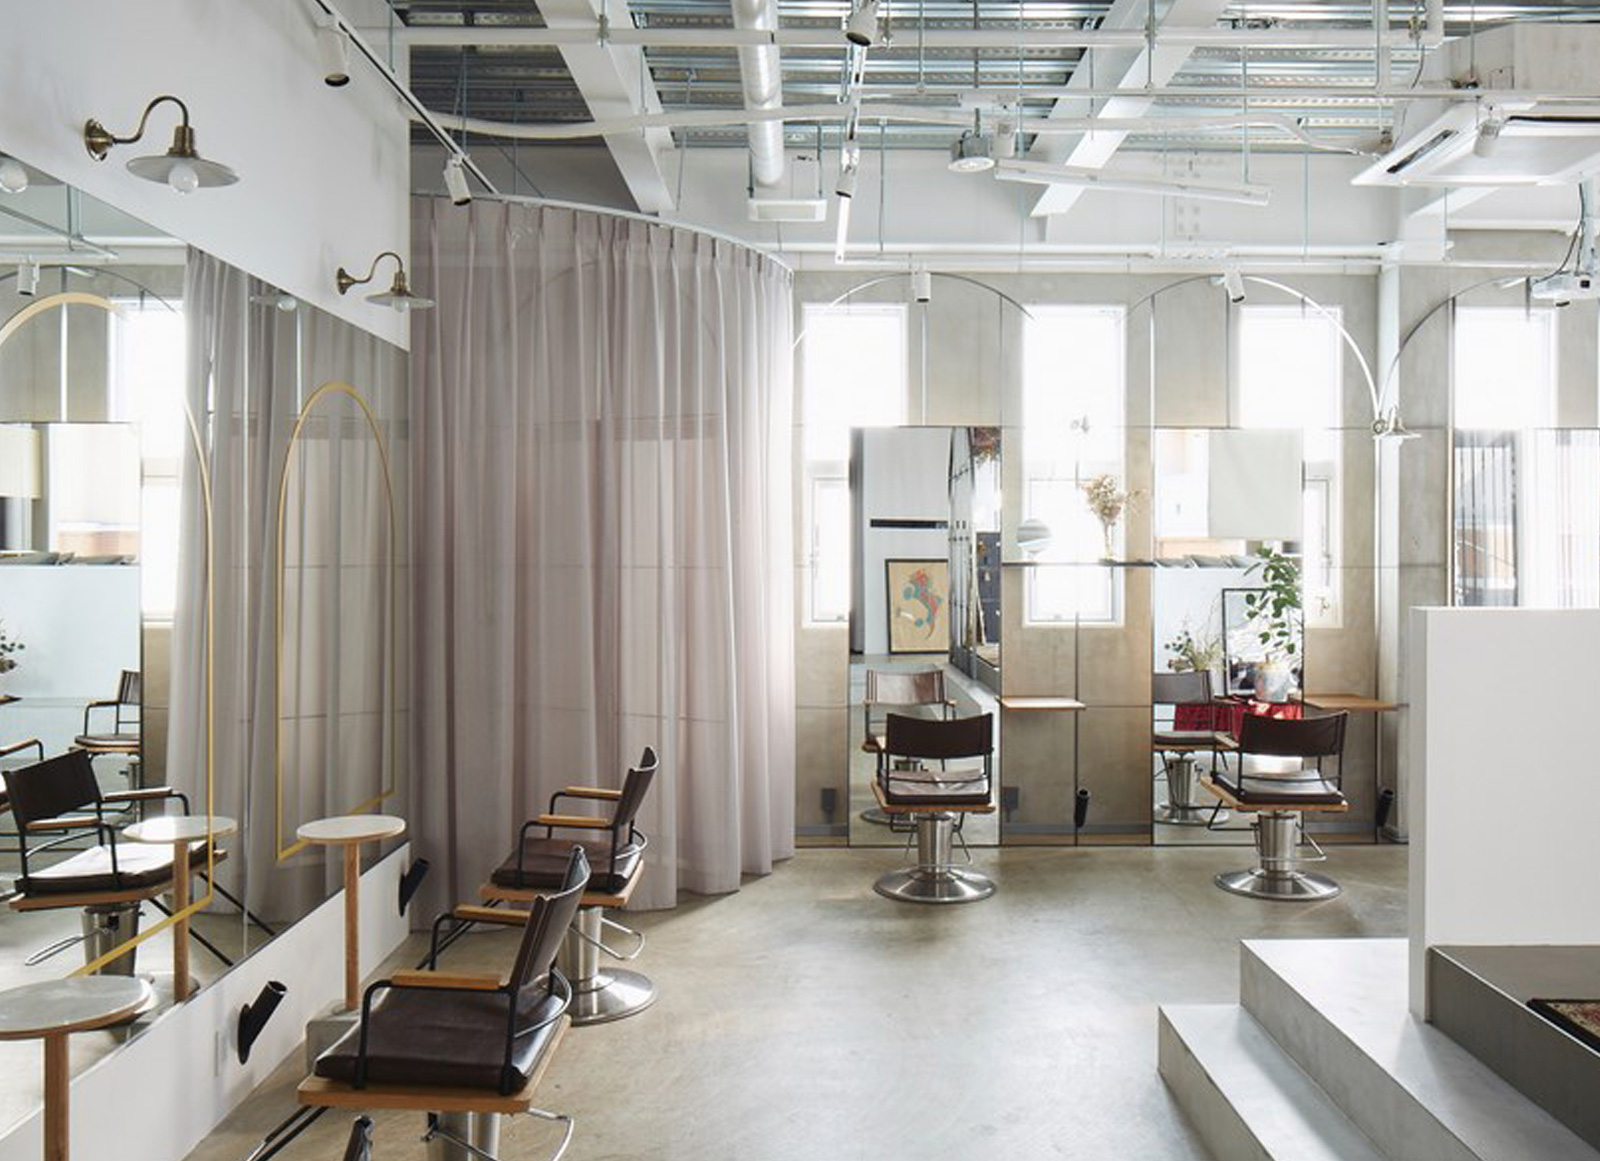 Beauty salon in Shibuya | Nanometer Architecture | International Architecture Awards 2019